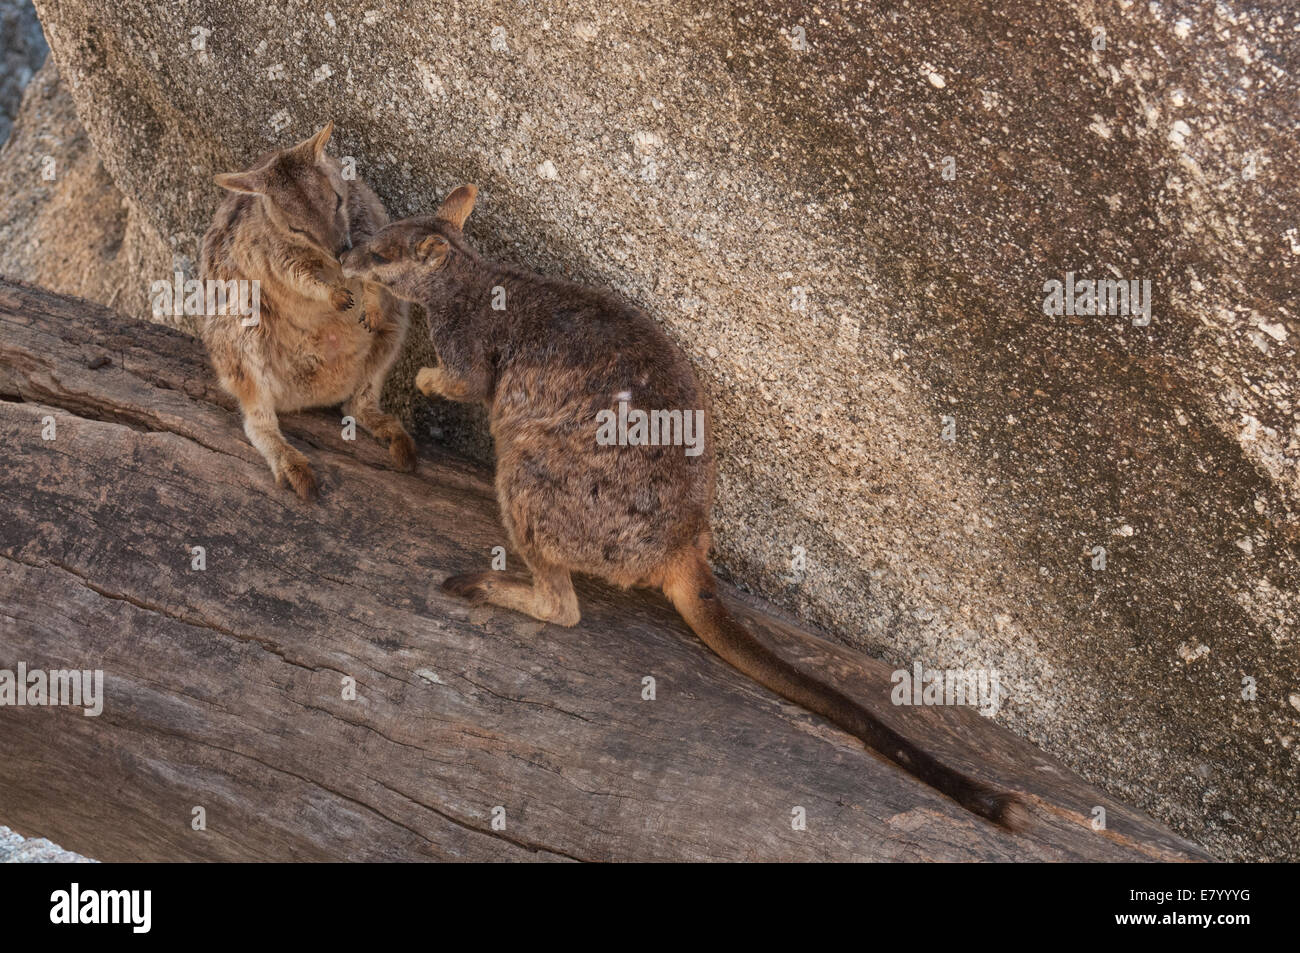 Stock photo of two Mareeba unadorned rock wallabies grooming eachother. Stock Photo